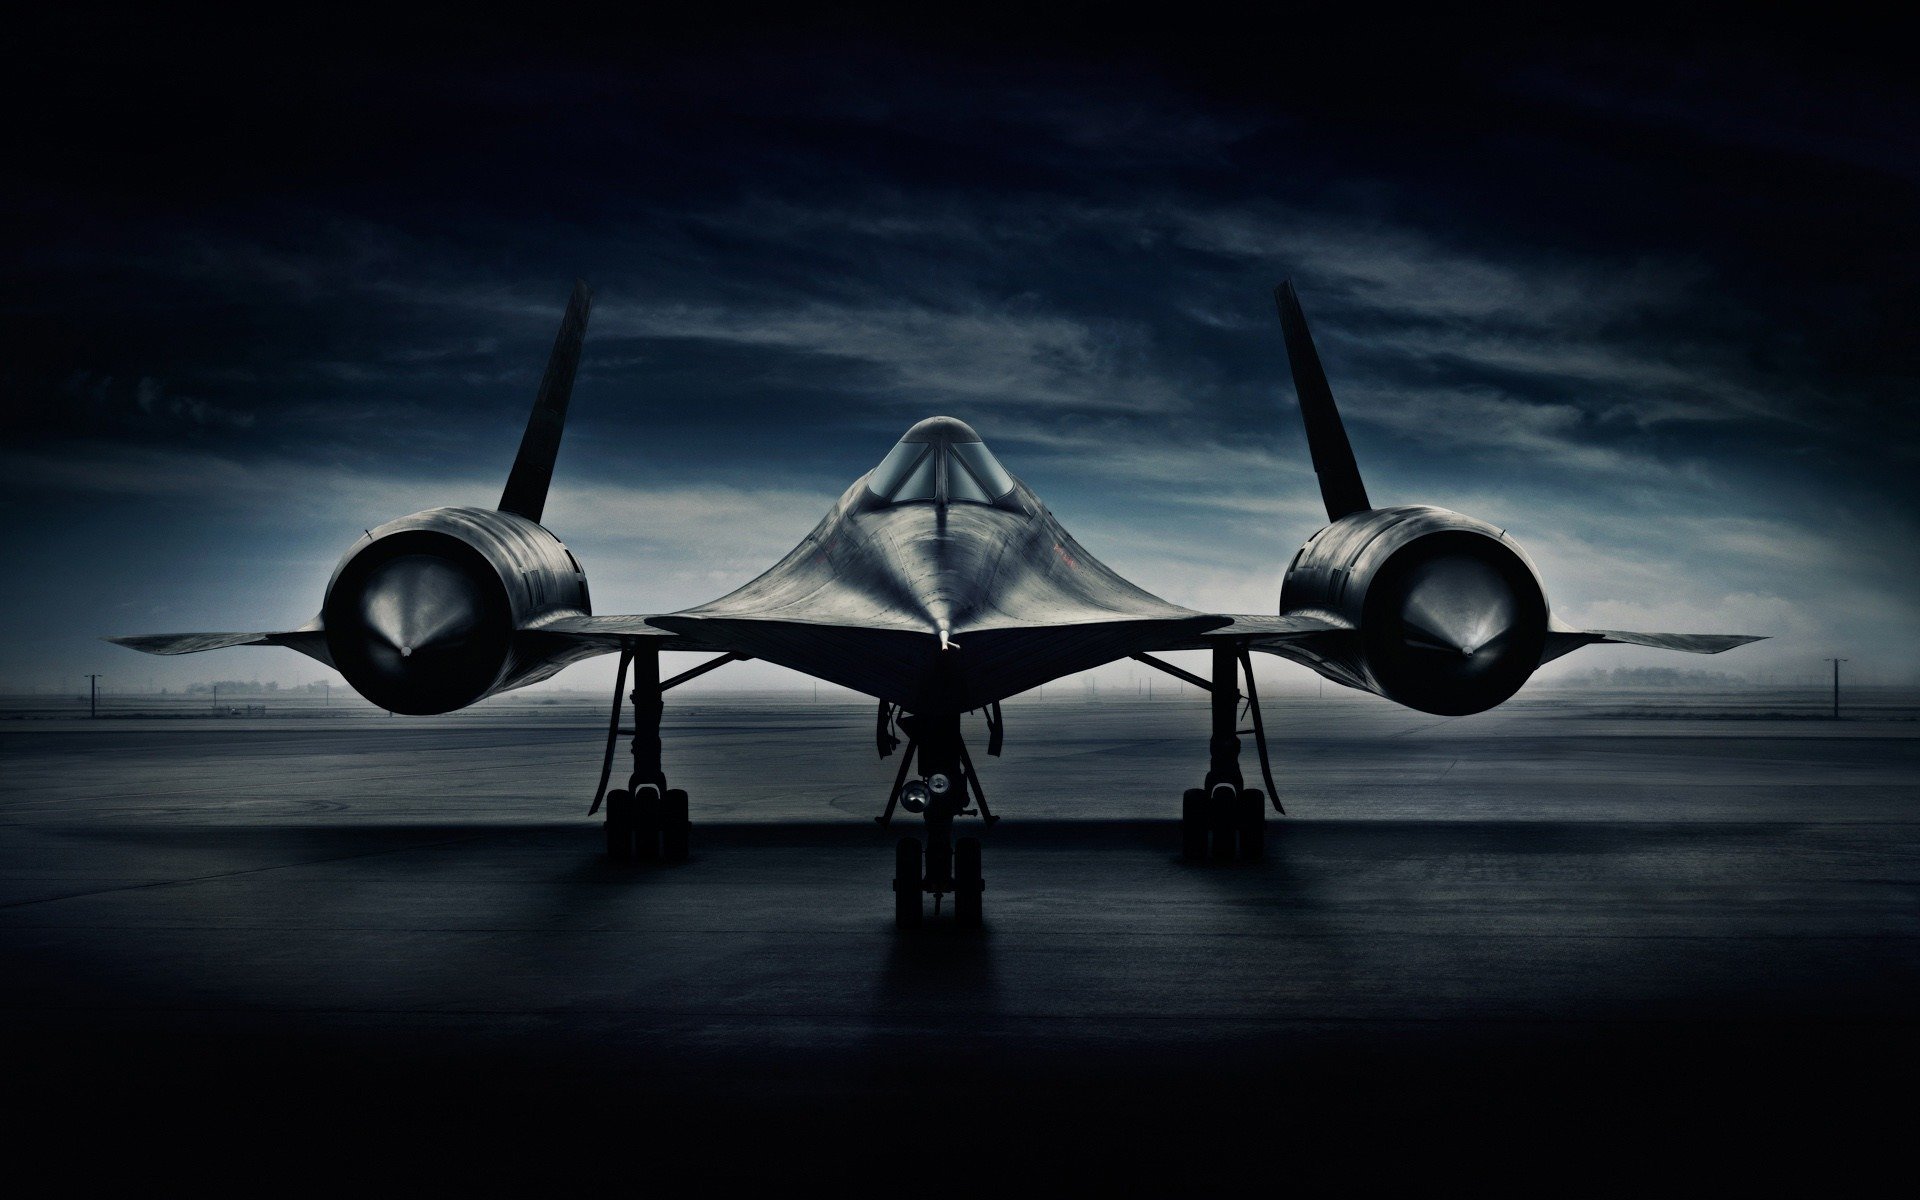 SR 72 Darkstar: The Secret Spy Plane The U.S. Military Wants. The National Interest